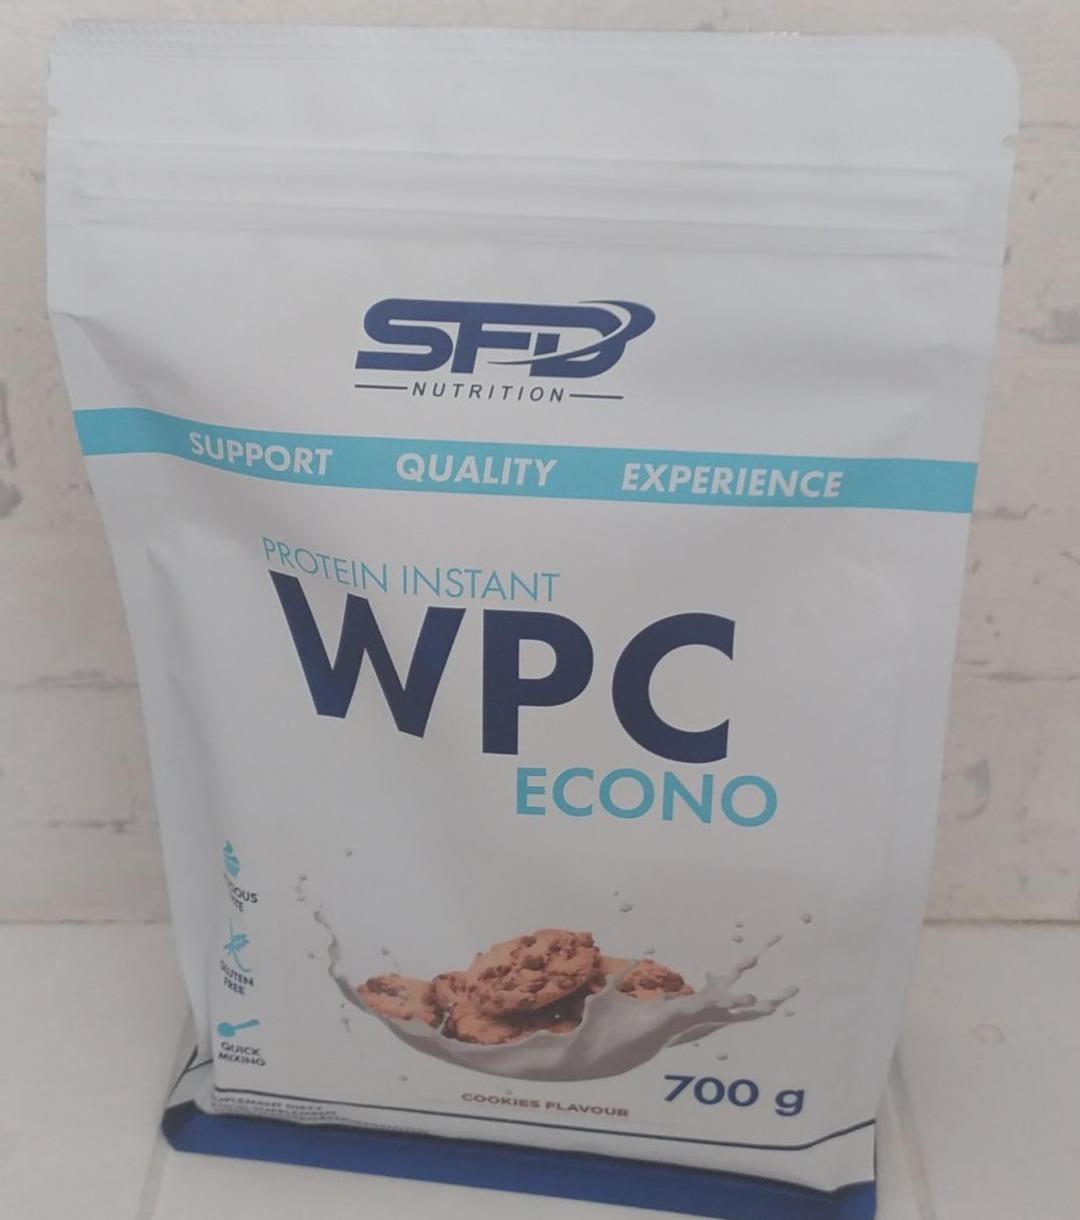 Fotografie - Protein instant WPC Econo Cookies flavour SFD Nutrition